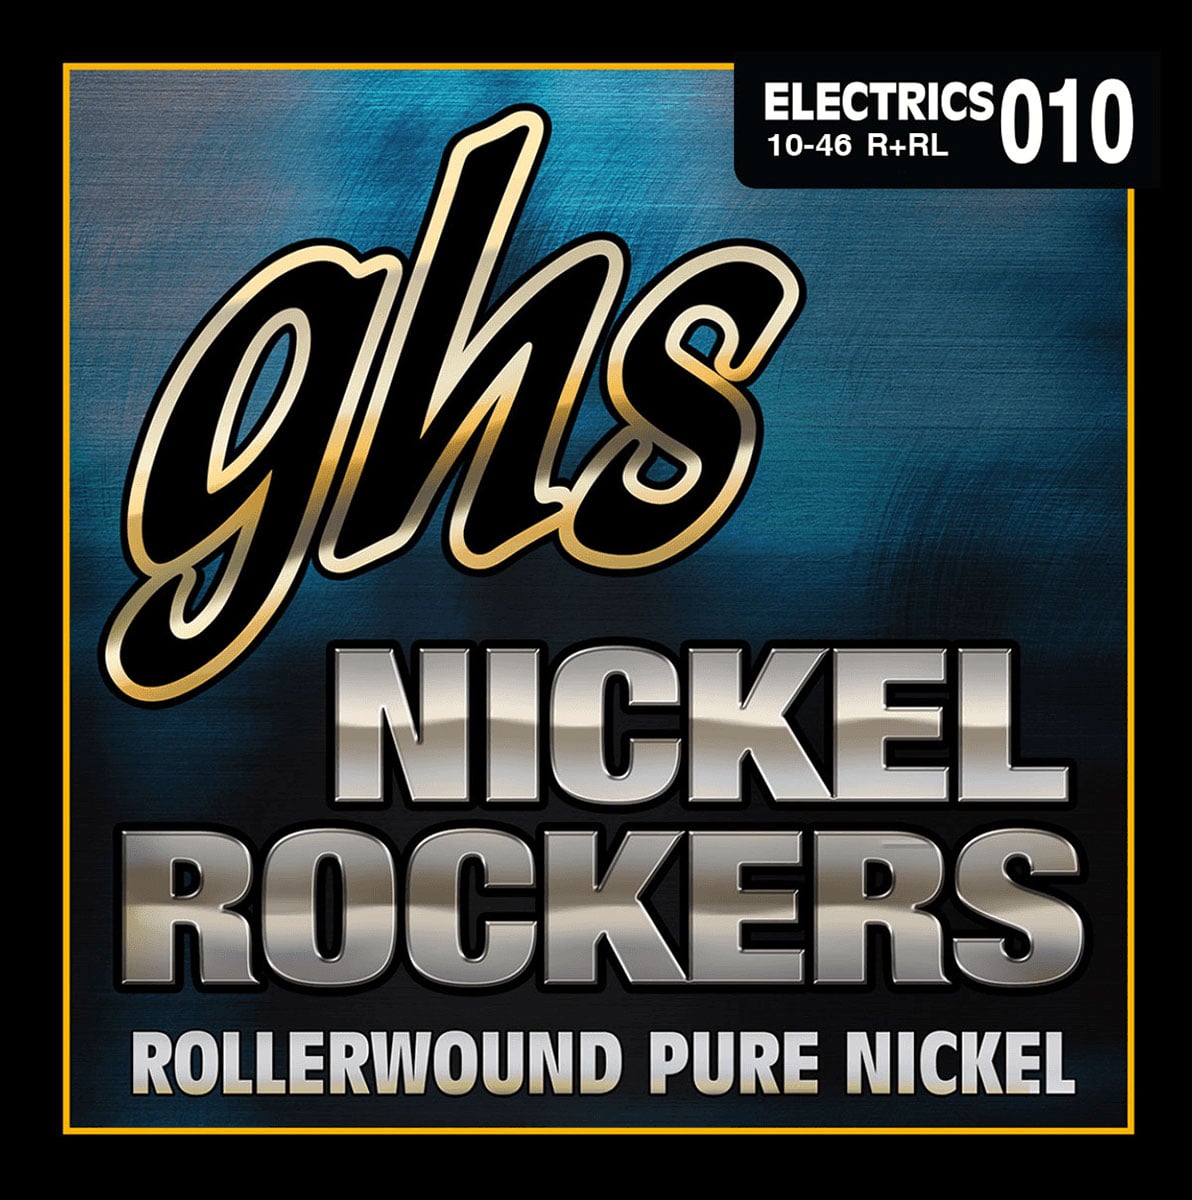 GHS R-RL NICKEL ROCKERS LIGHT 10-46